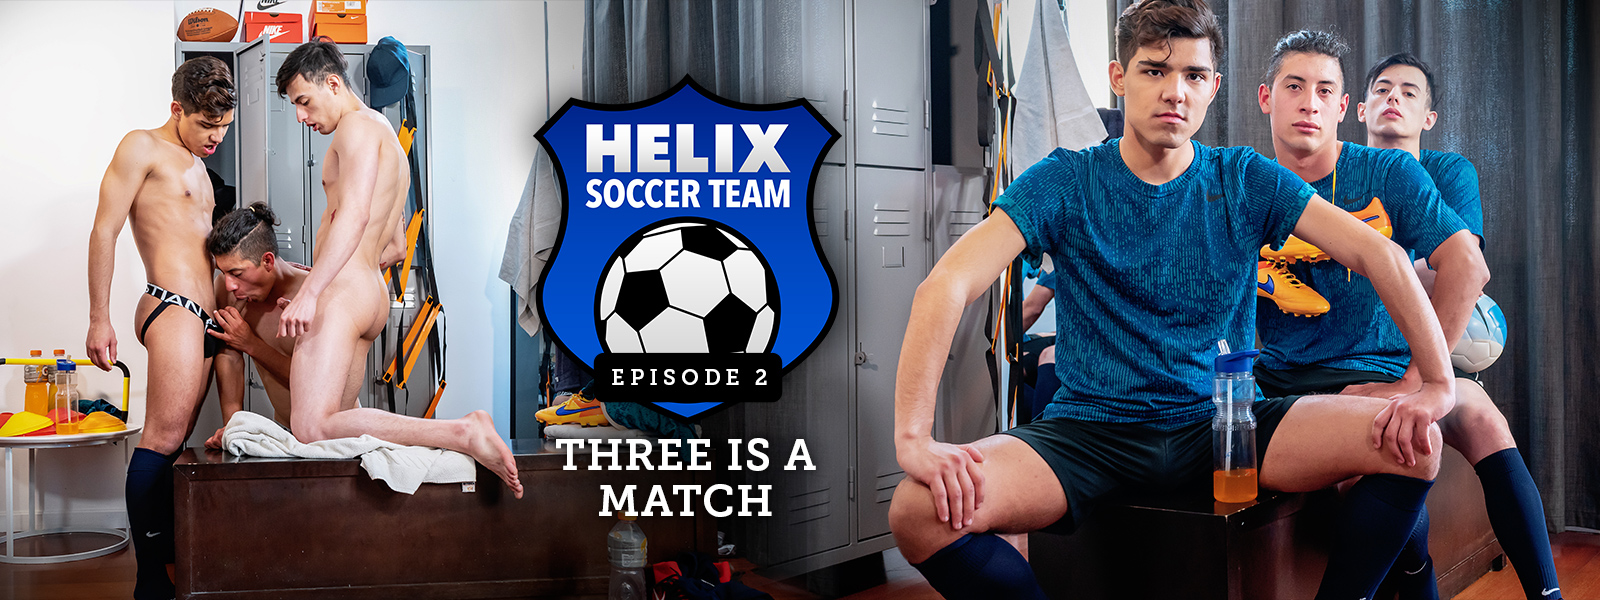 Helix Soccer Team